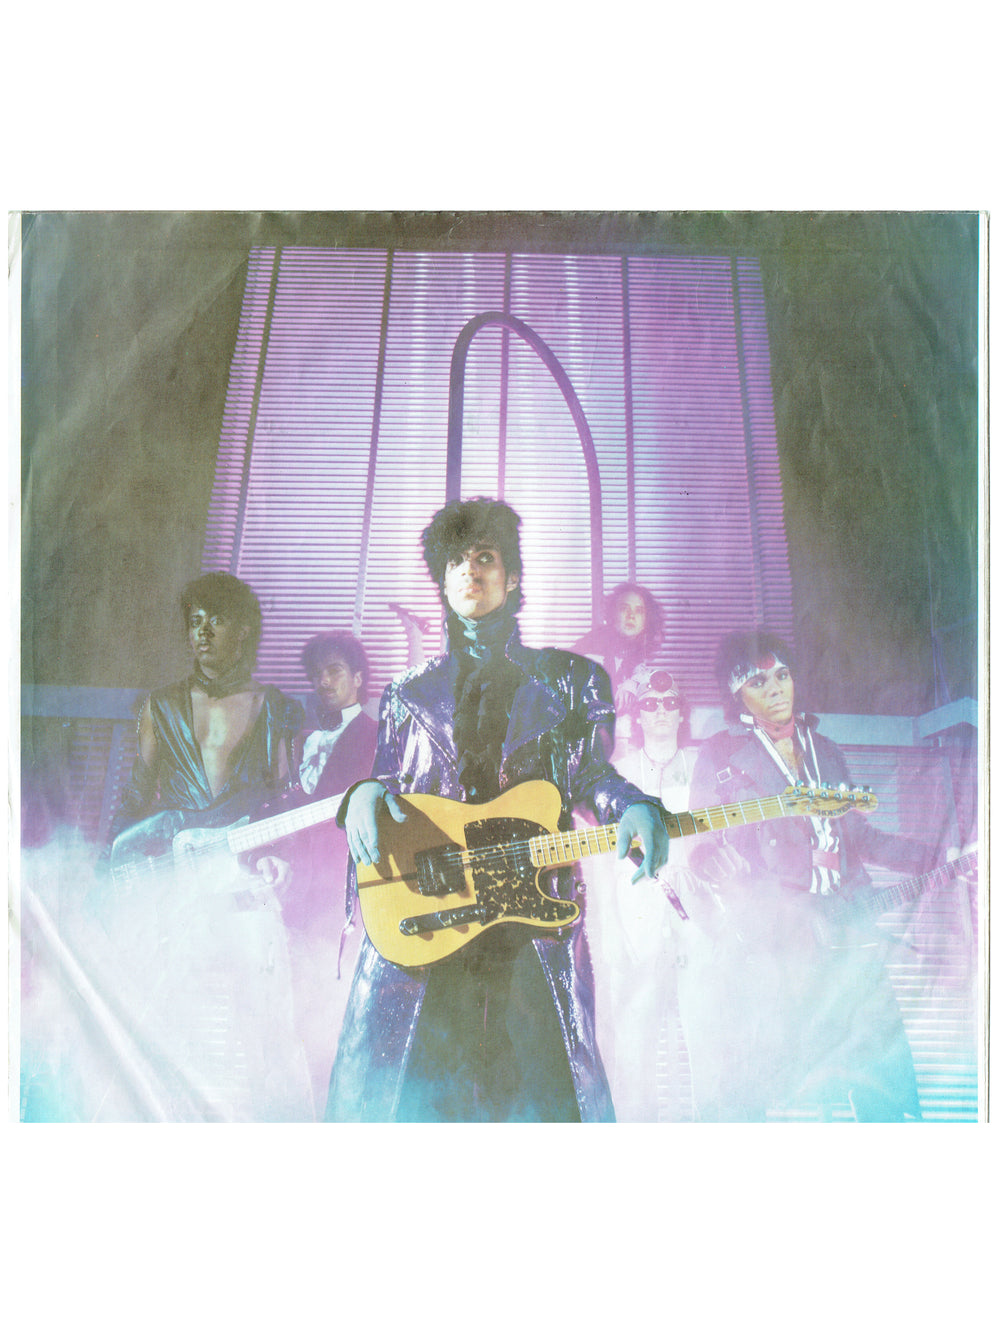 Prince – & The Revolution 1999 Vinyl 2 x LP Album Europe Preloved:1982